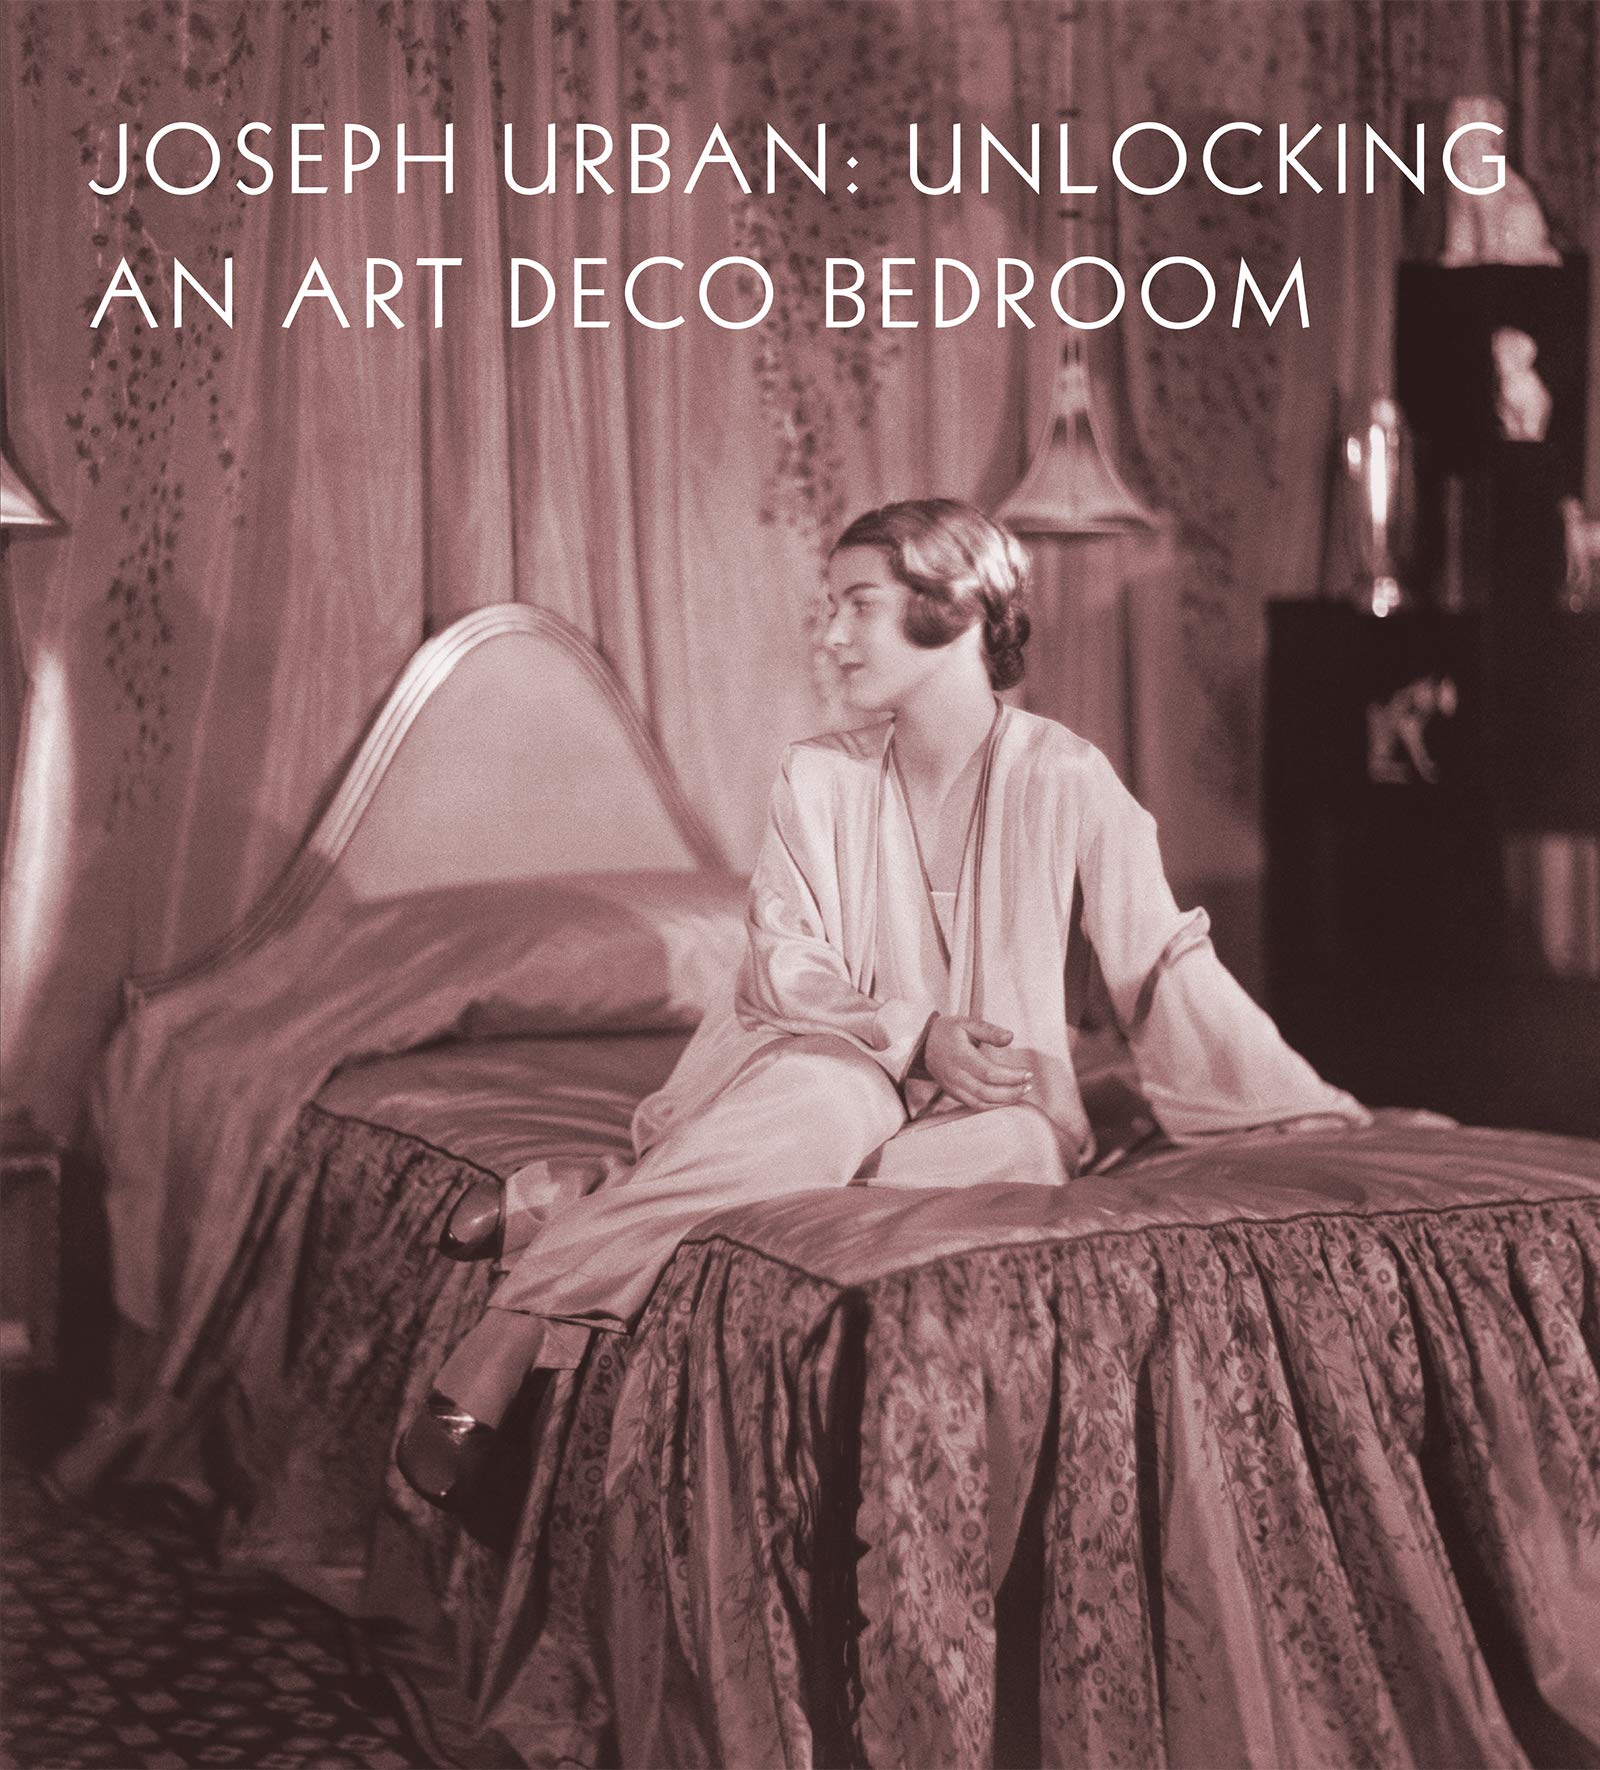 Joseph Urban: Unlocking an Art Deco Bedroom